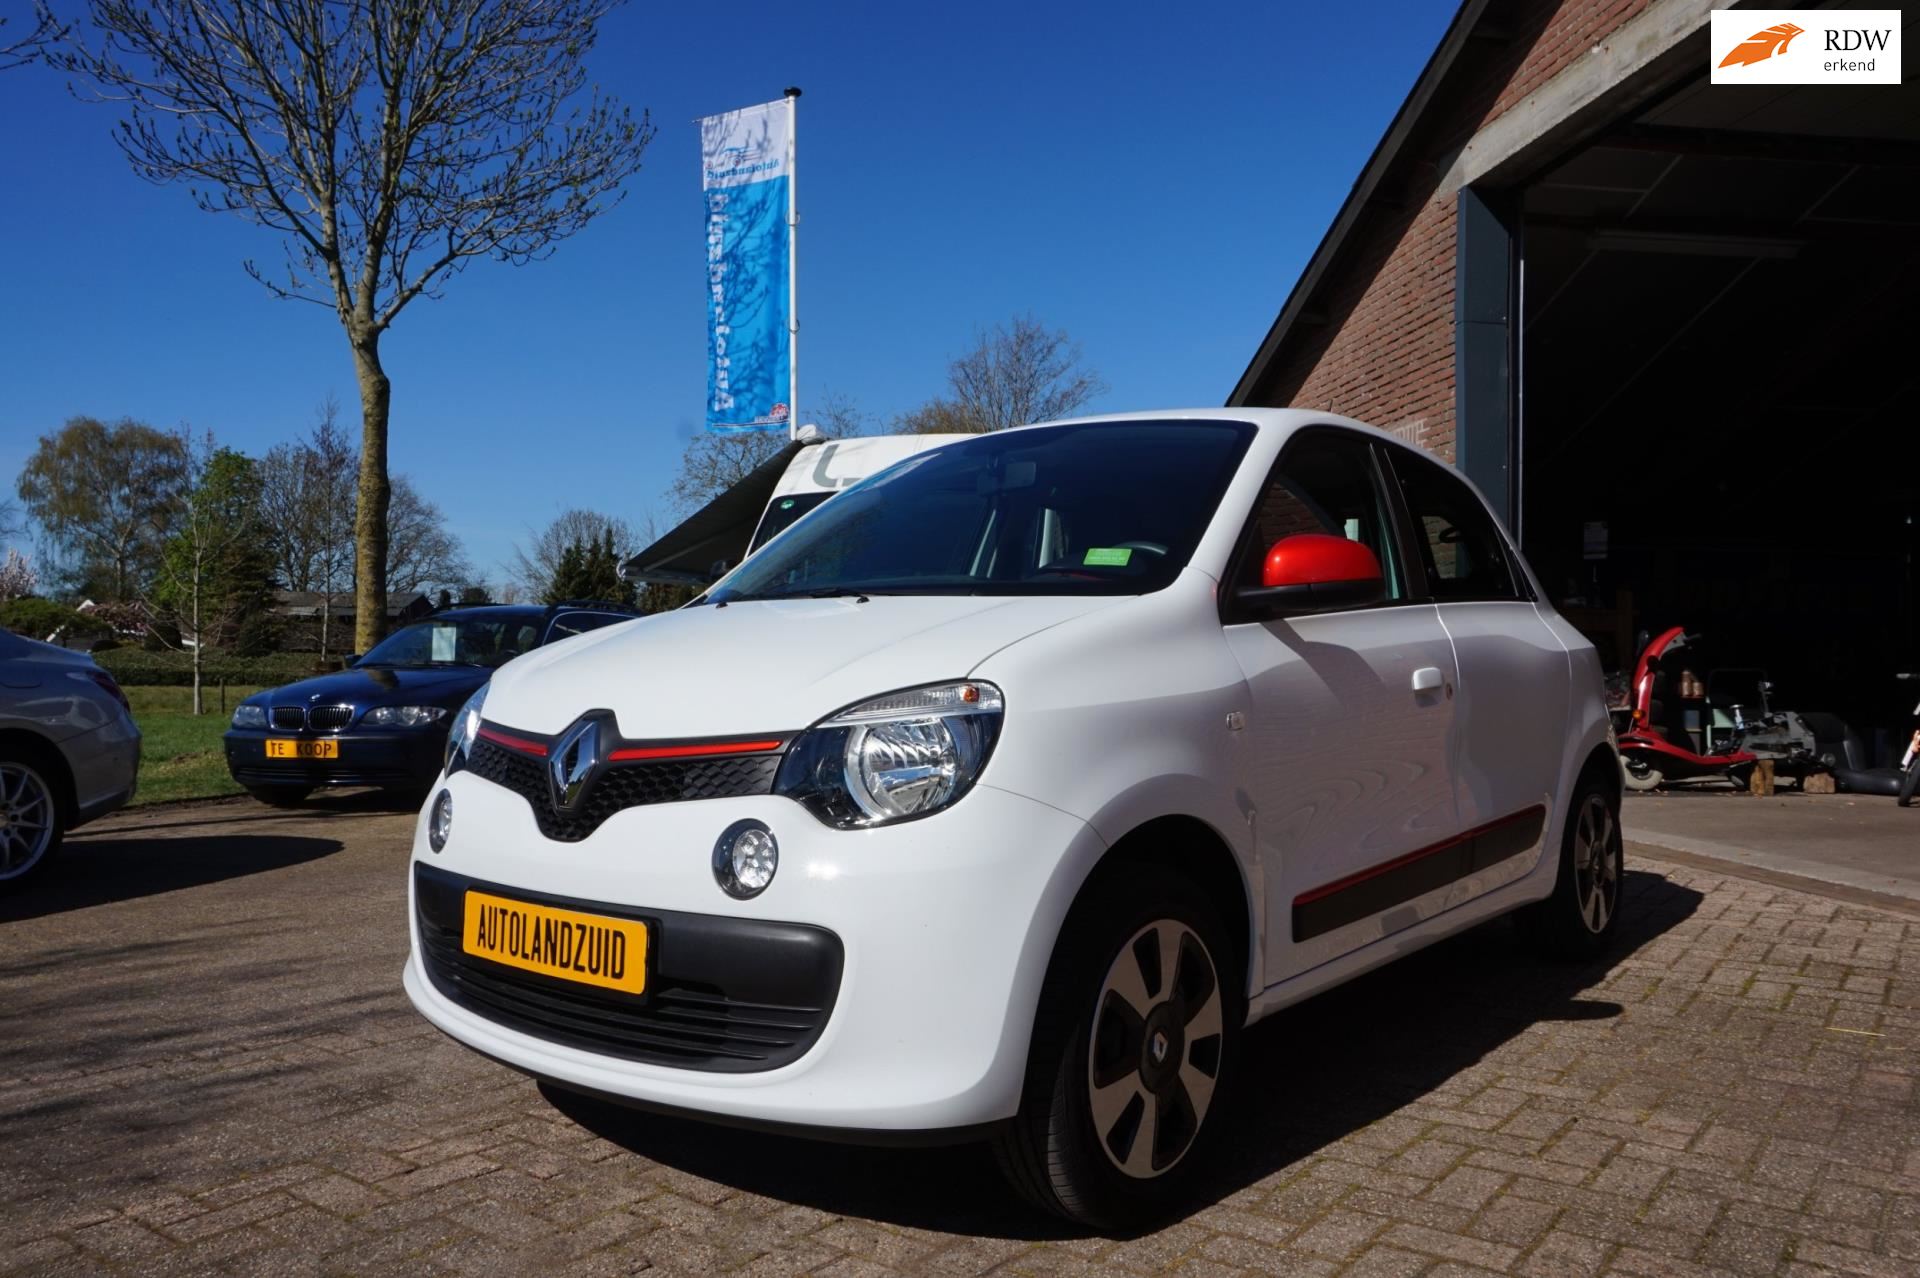 Renault Twingo occasion - Autoland Zuid